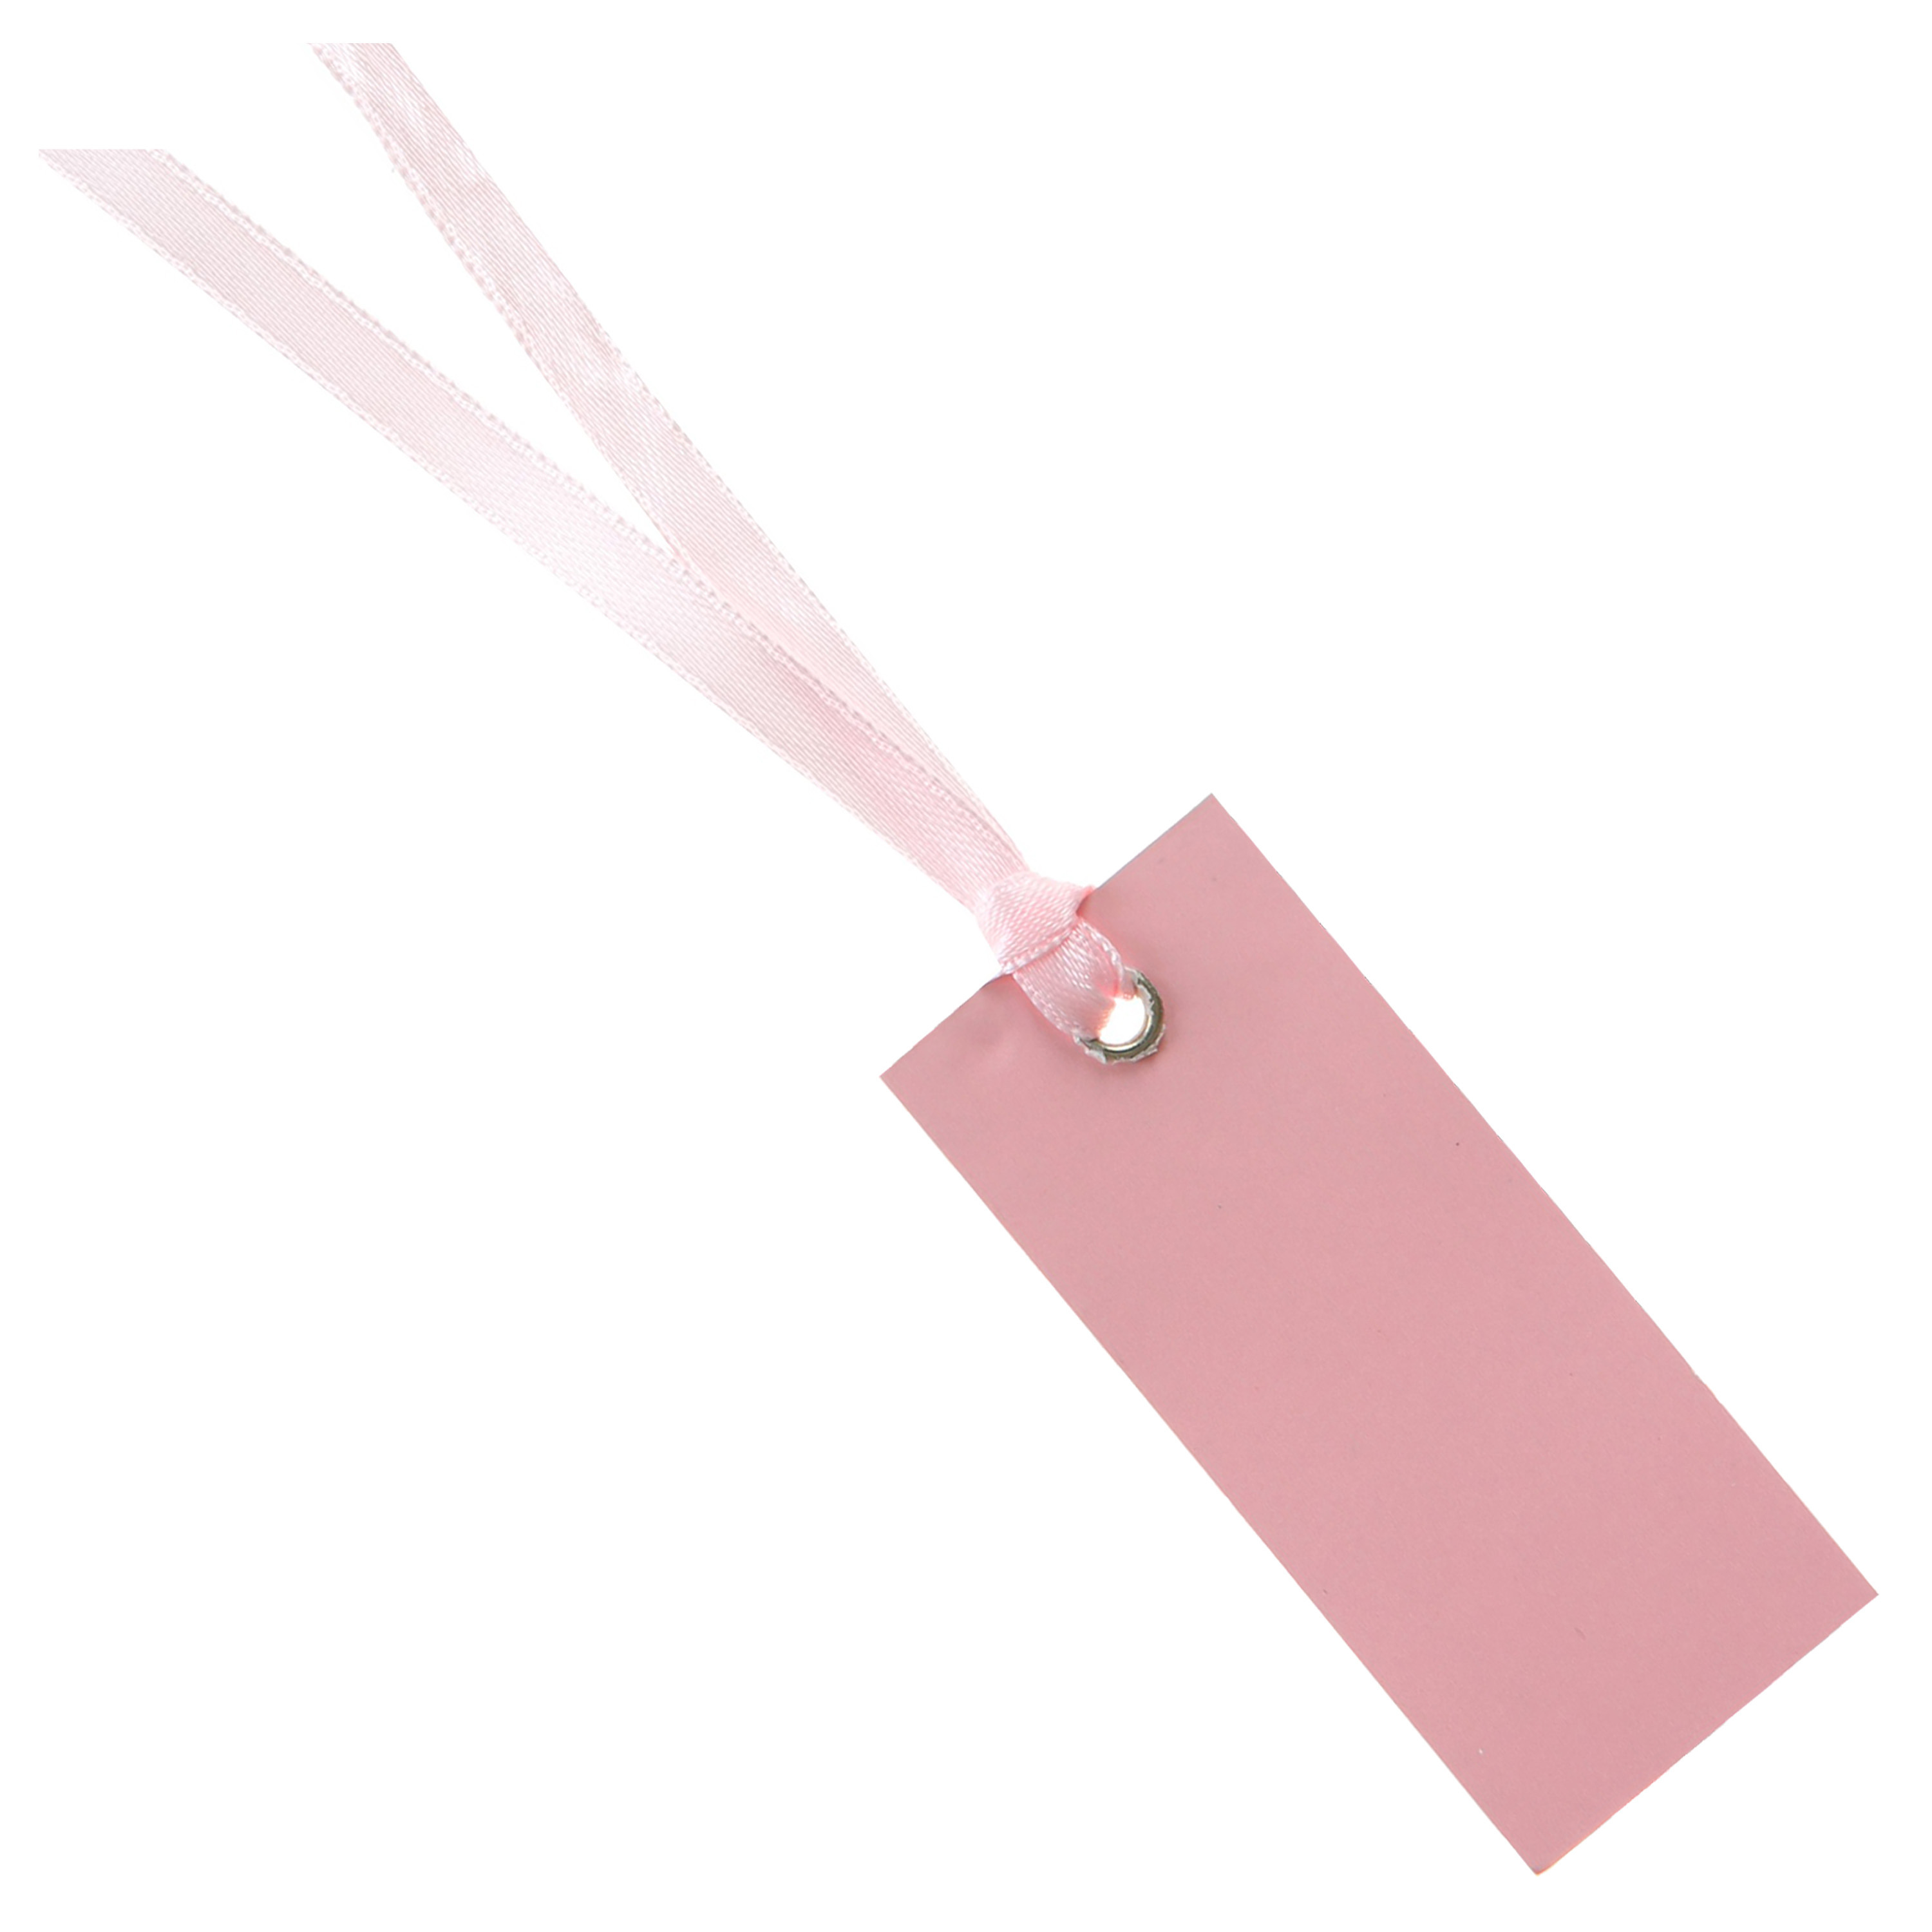 Santex cadeaulabels met lintje set 12x stuks roze 3 x 7 cm naam tags